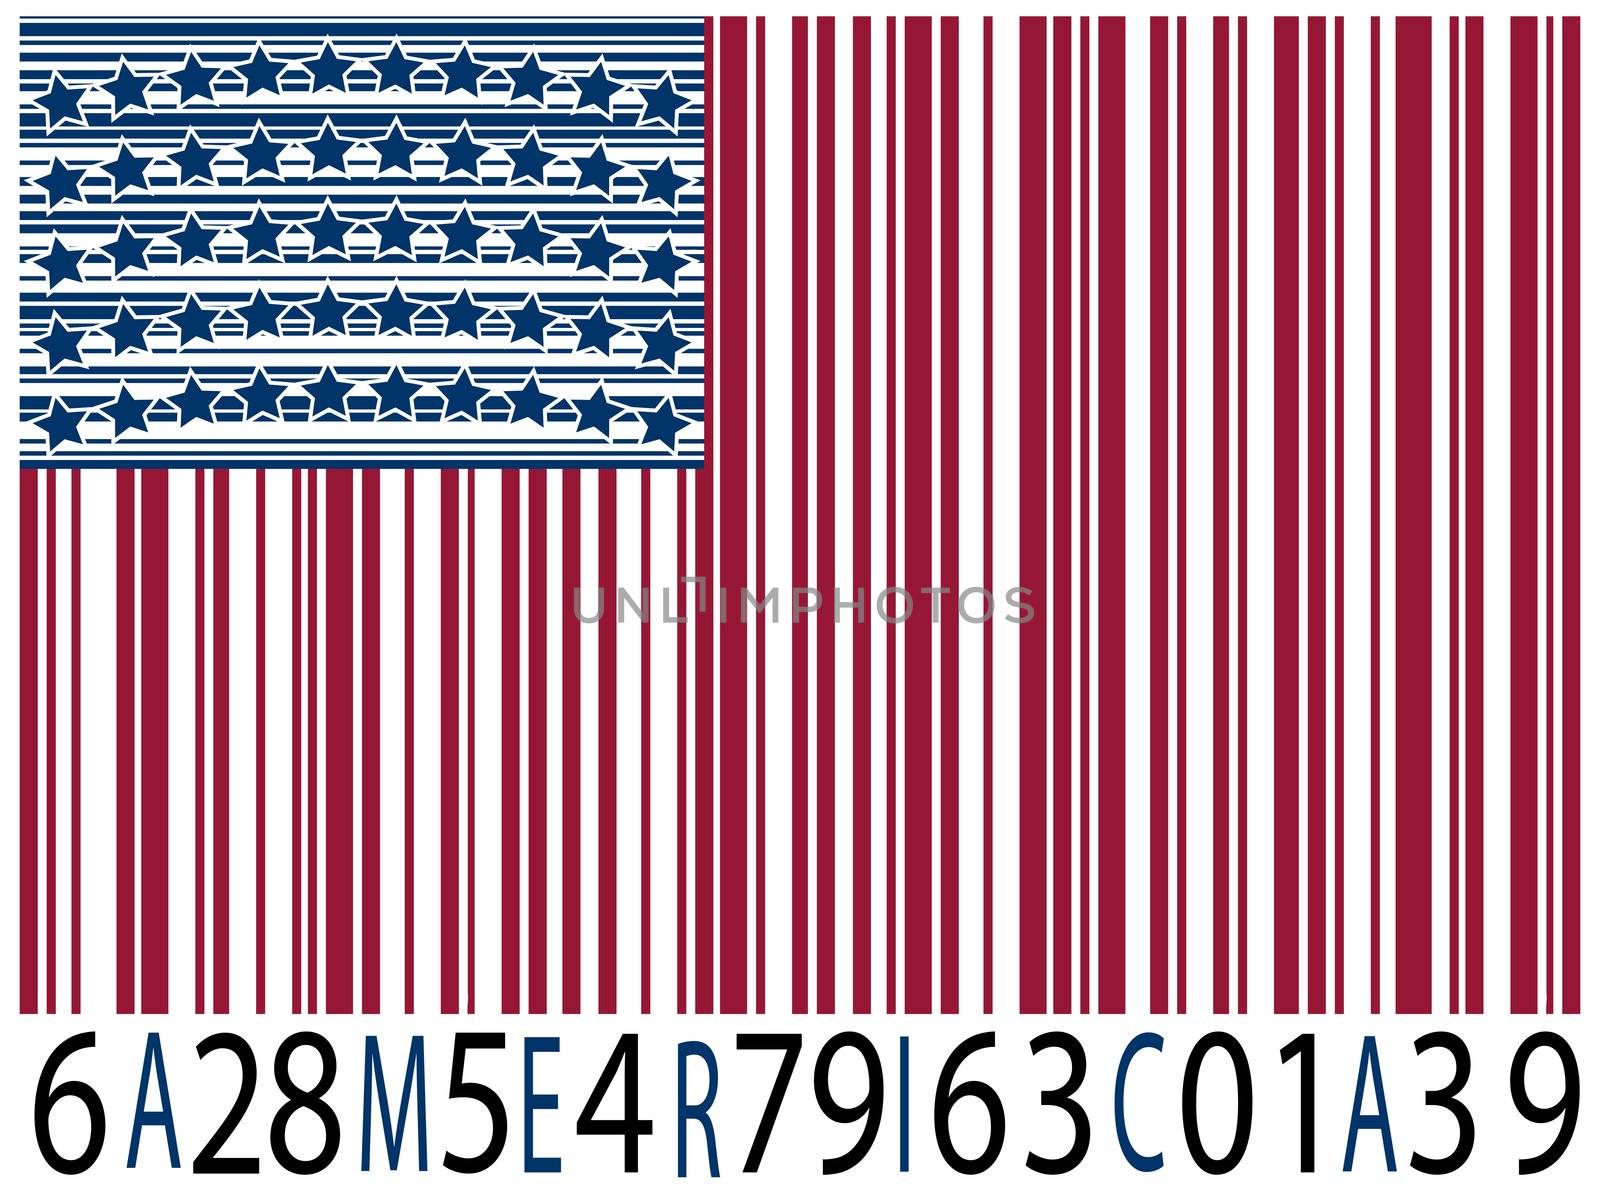 america bar codes flag, abstract vector art illustration